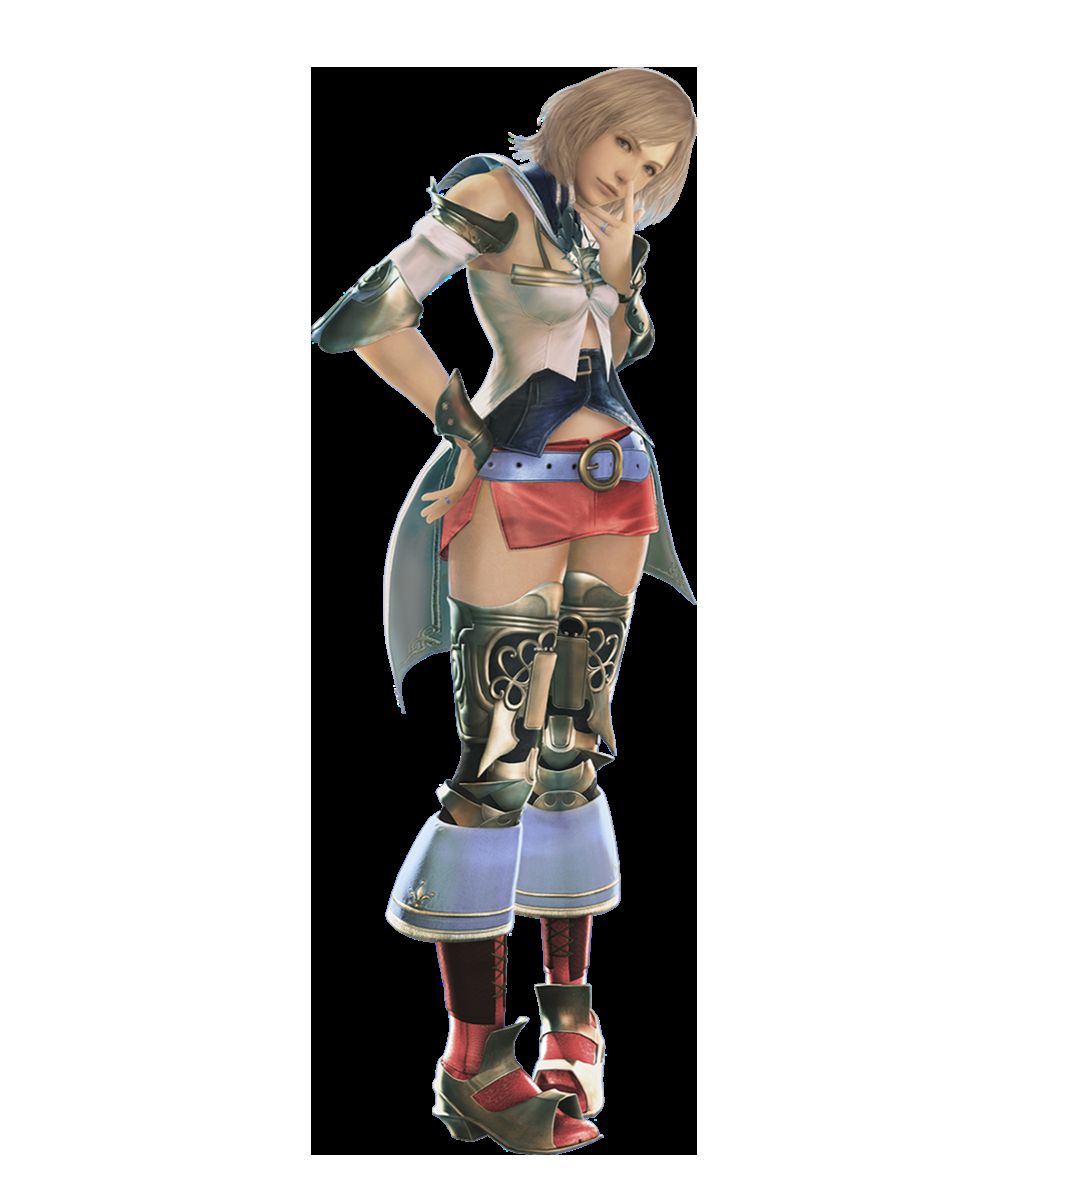 【Image】Female knight wears skirt on the battlefield 2